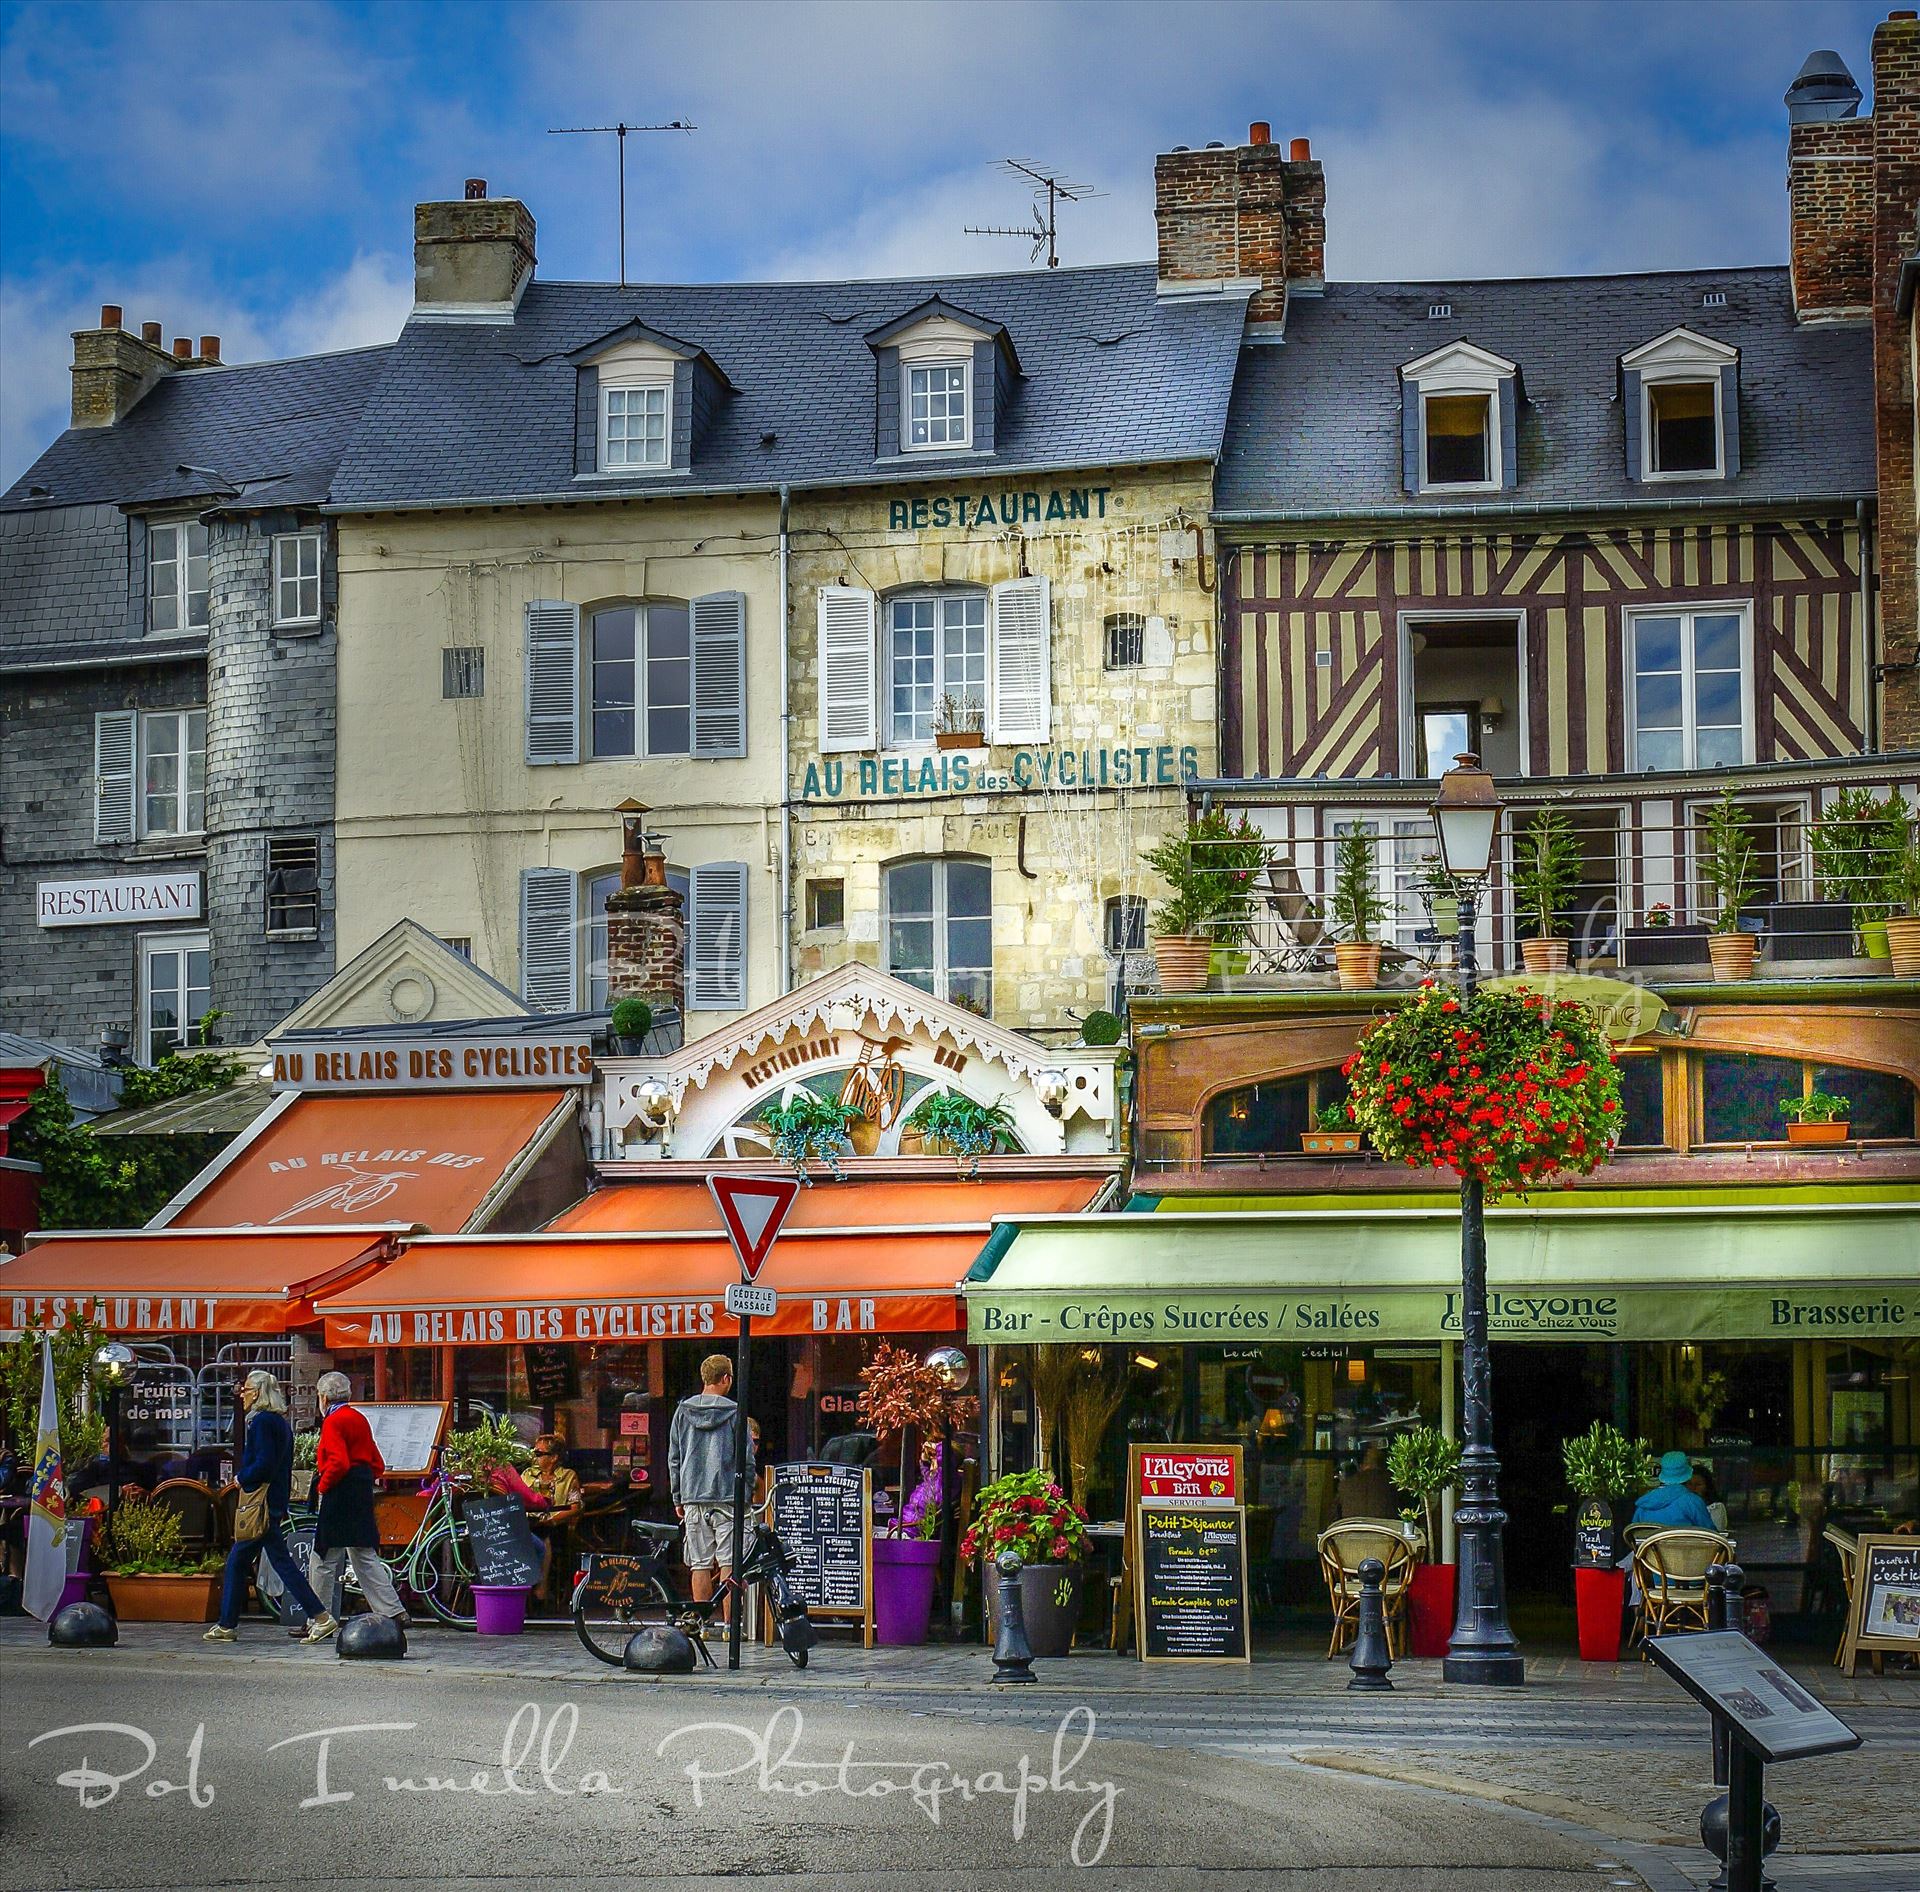 Merchants On City Street In Honfleur, France  by Buckmaster